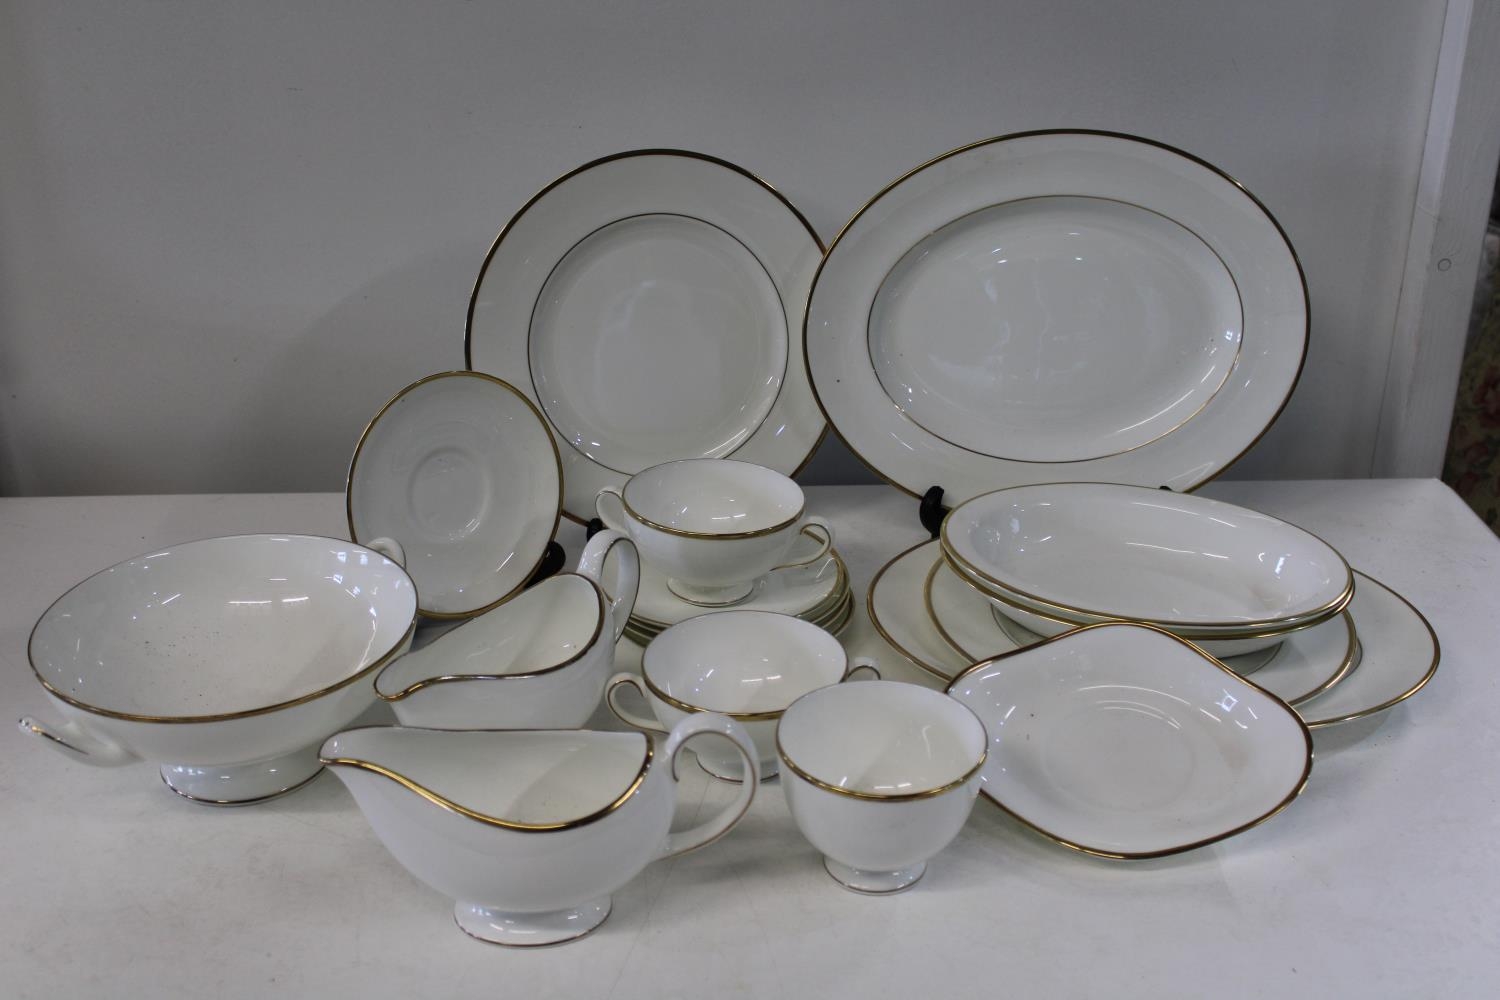 A selection of Wedgewood bone china - 18pcs